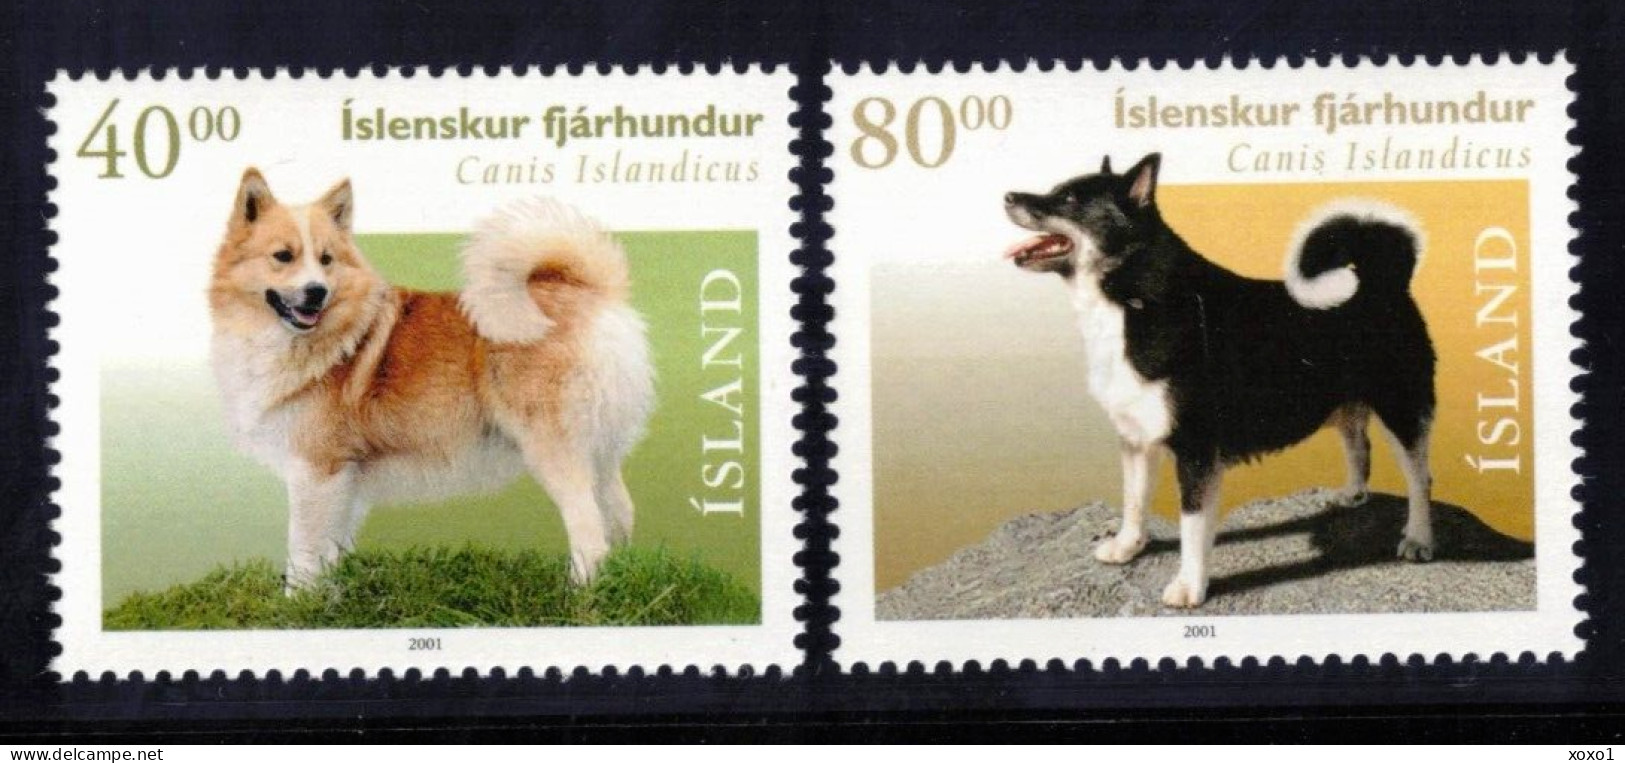 Iceland 2001 MiNr. 977 - 978 Island Mammals, Pets, Dogs, Icelandic Spitz 2v MNH** 4.00 € - Perros